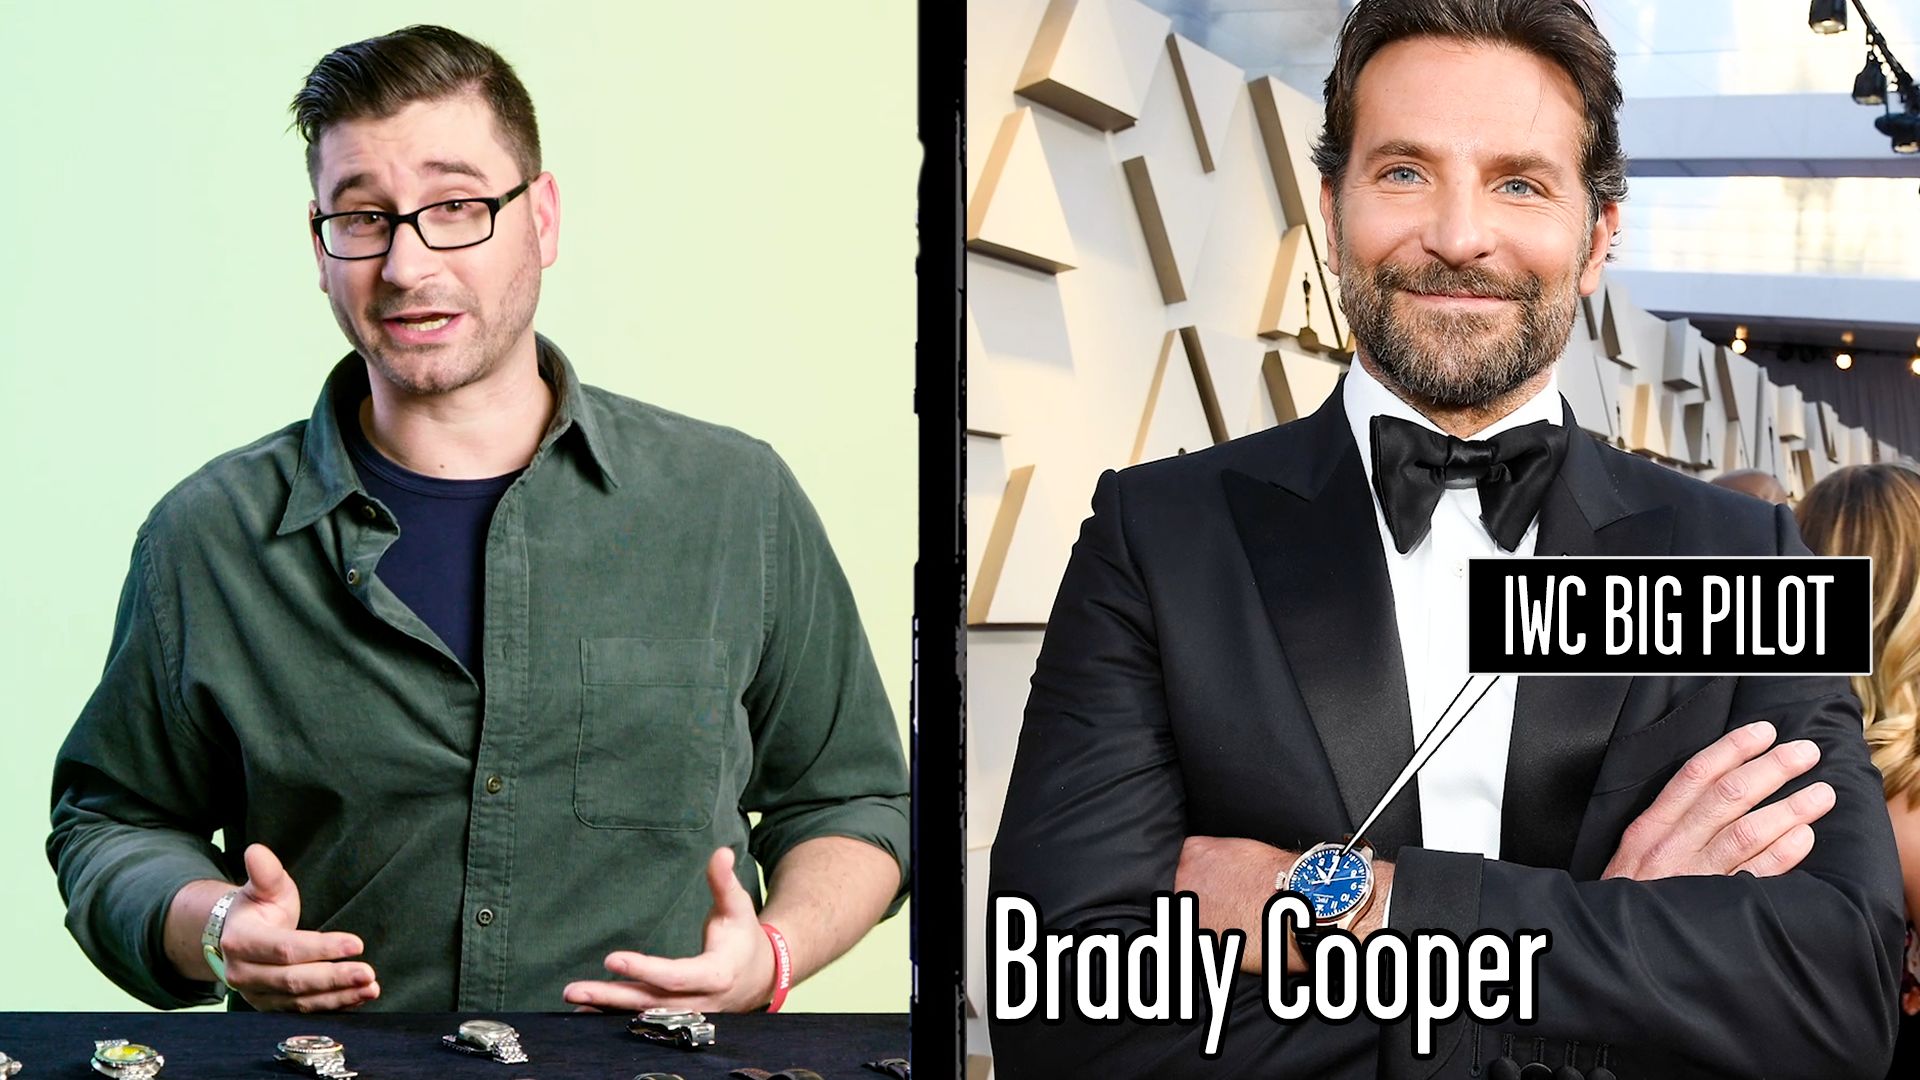 LIST: 5 times Bradley Cooper was already an IWC ambassador before